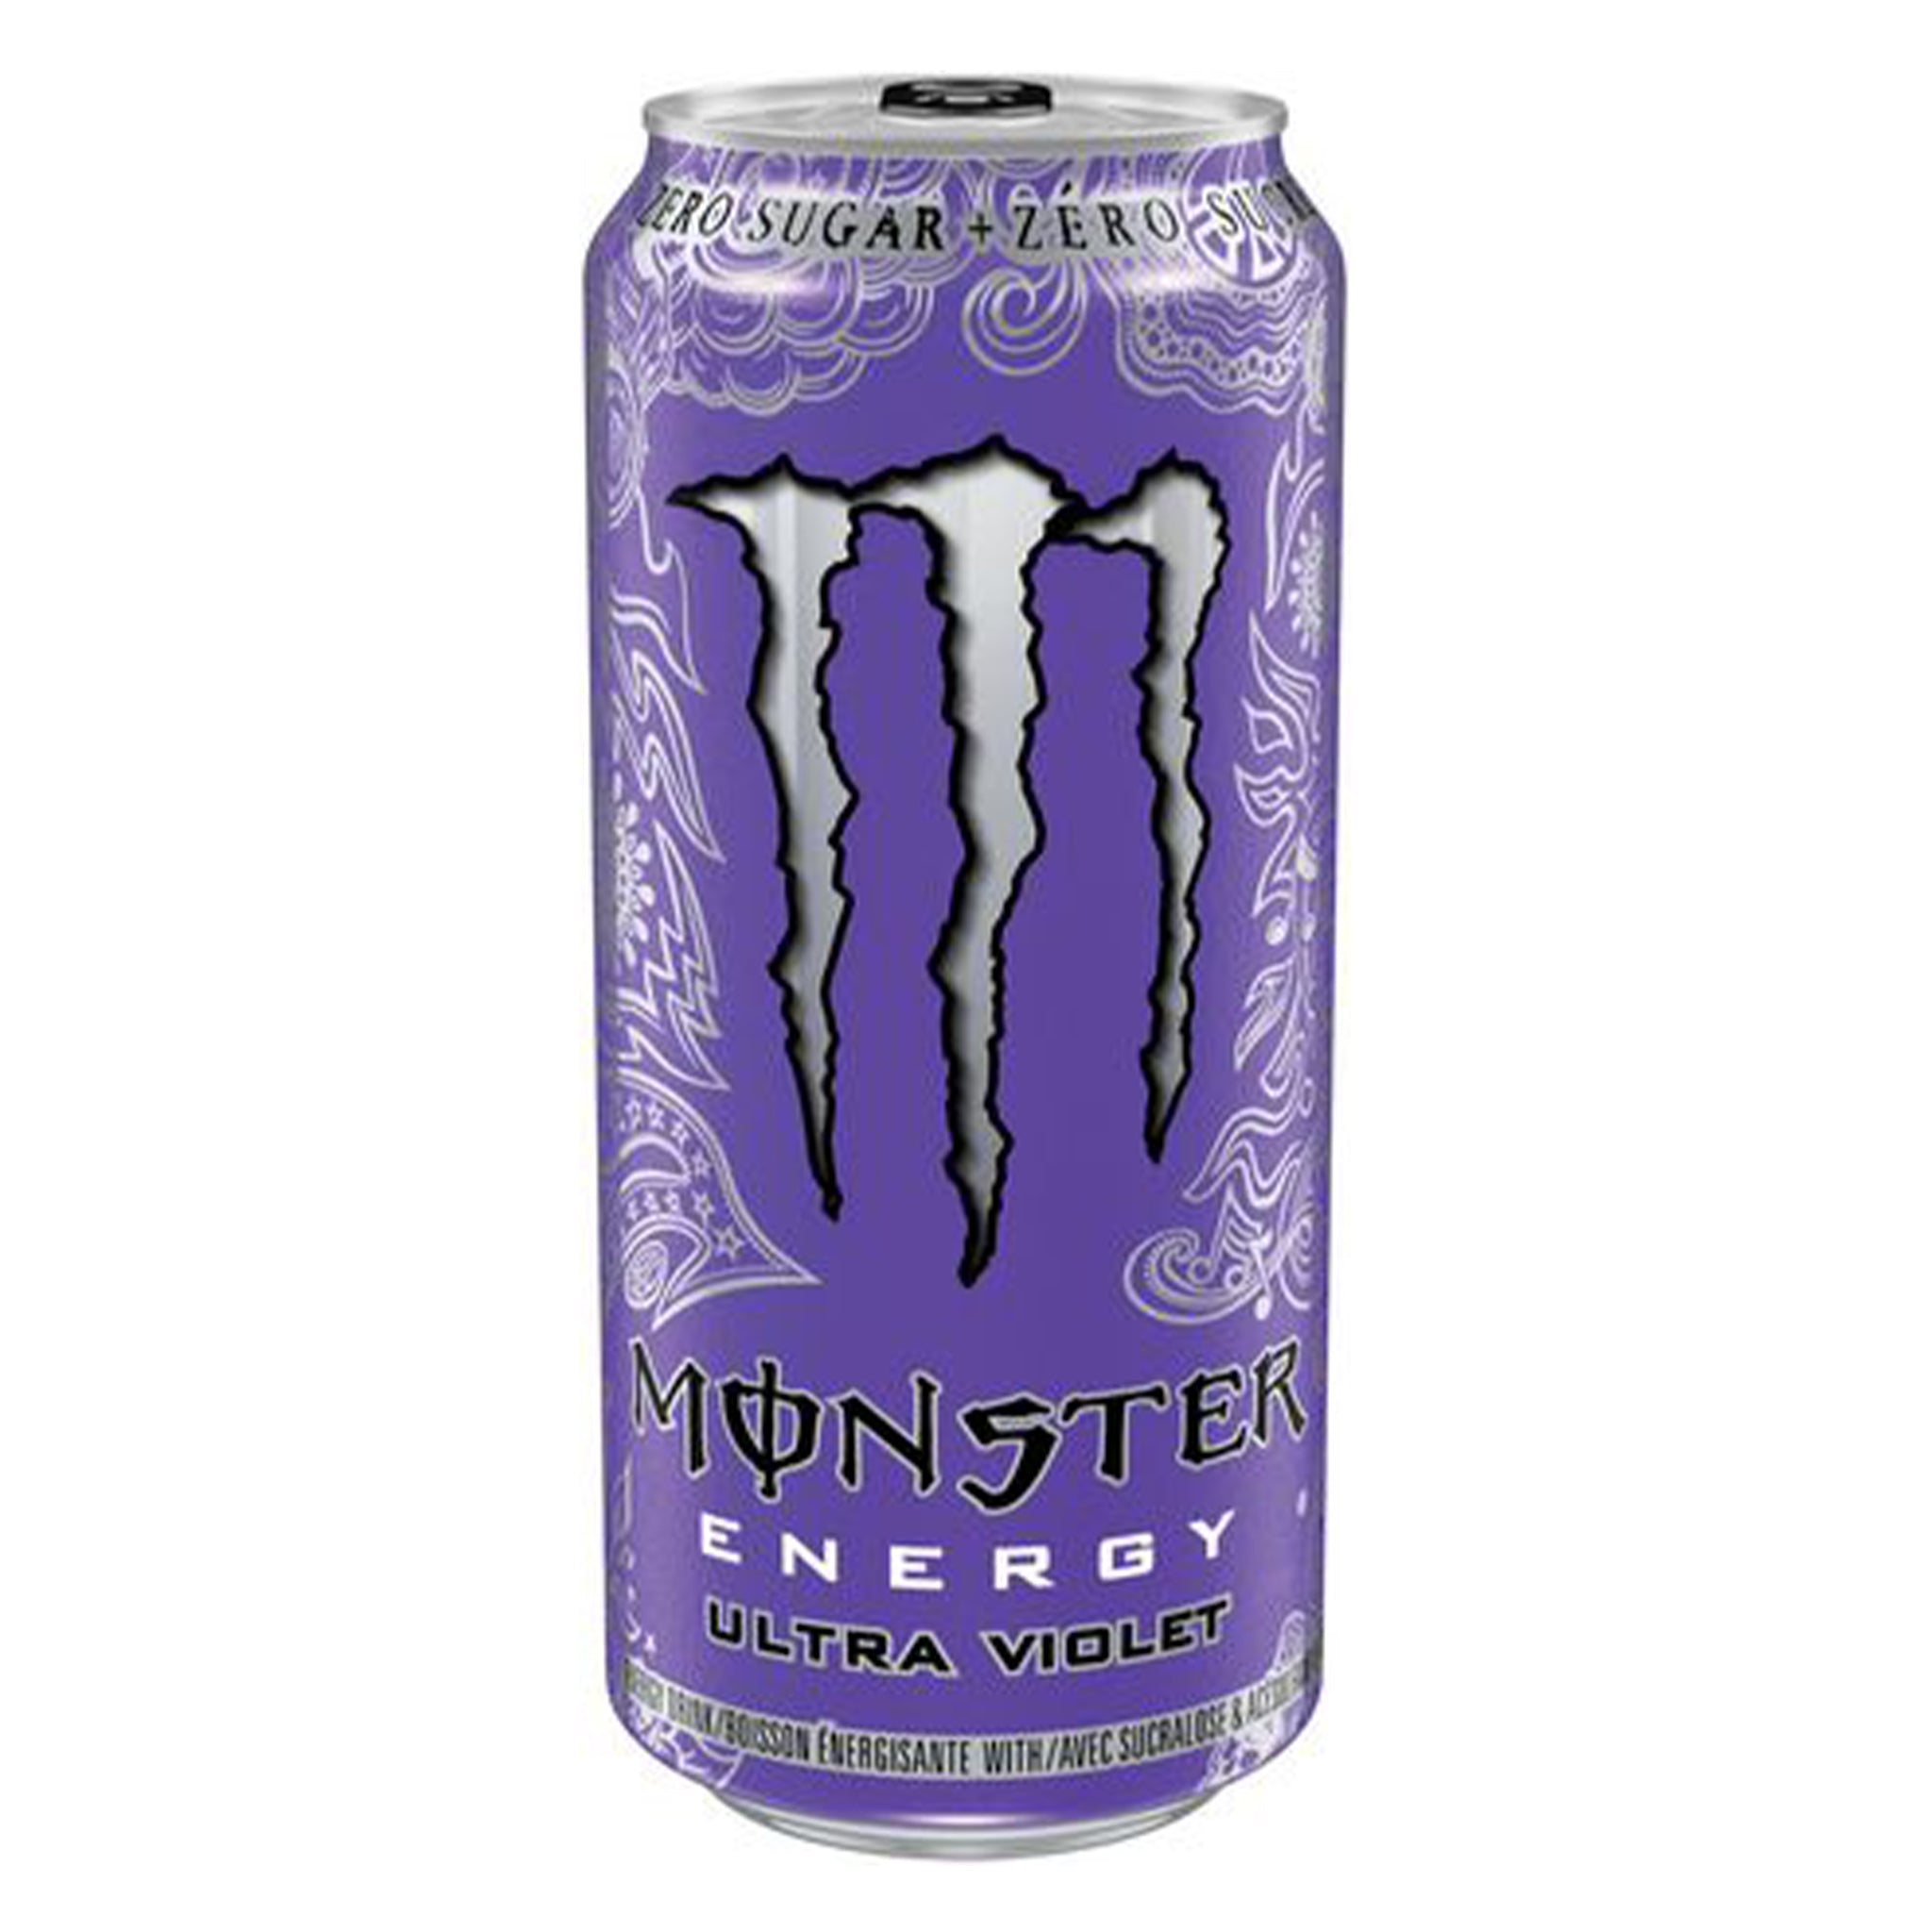 Monster Energy Zero Sugar - Citrus & Grape